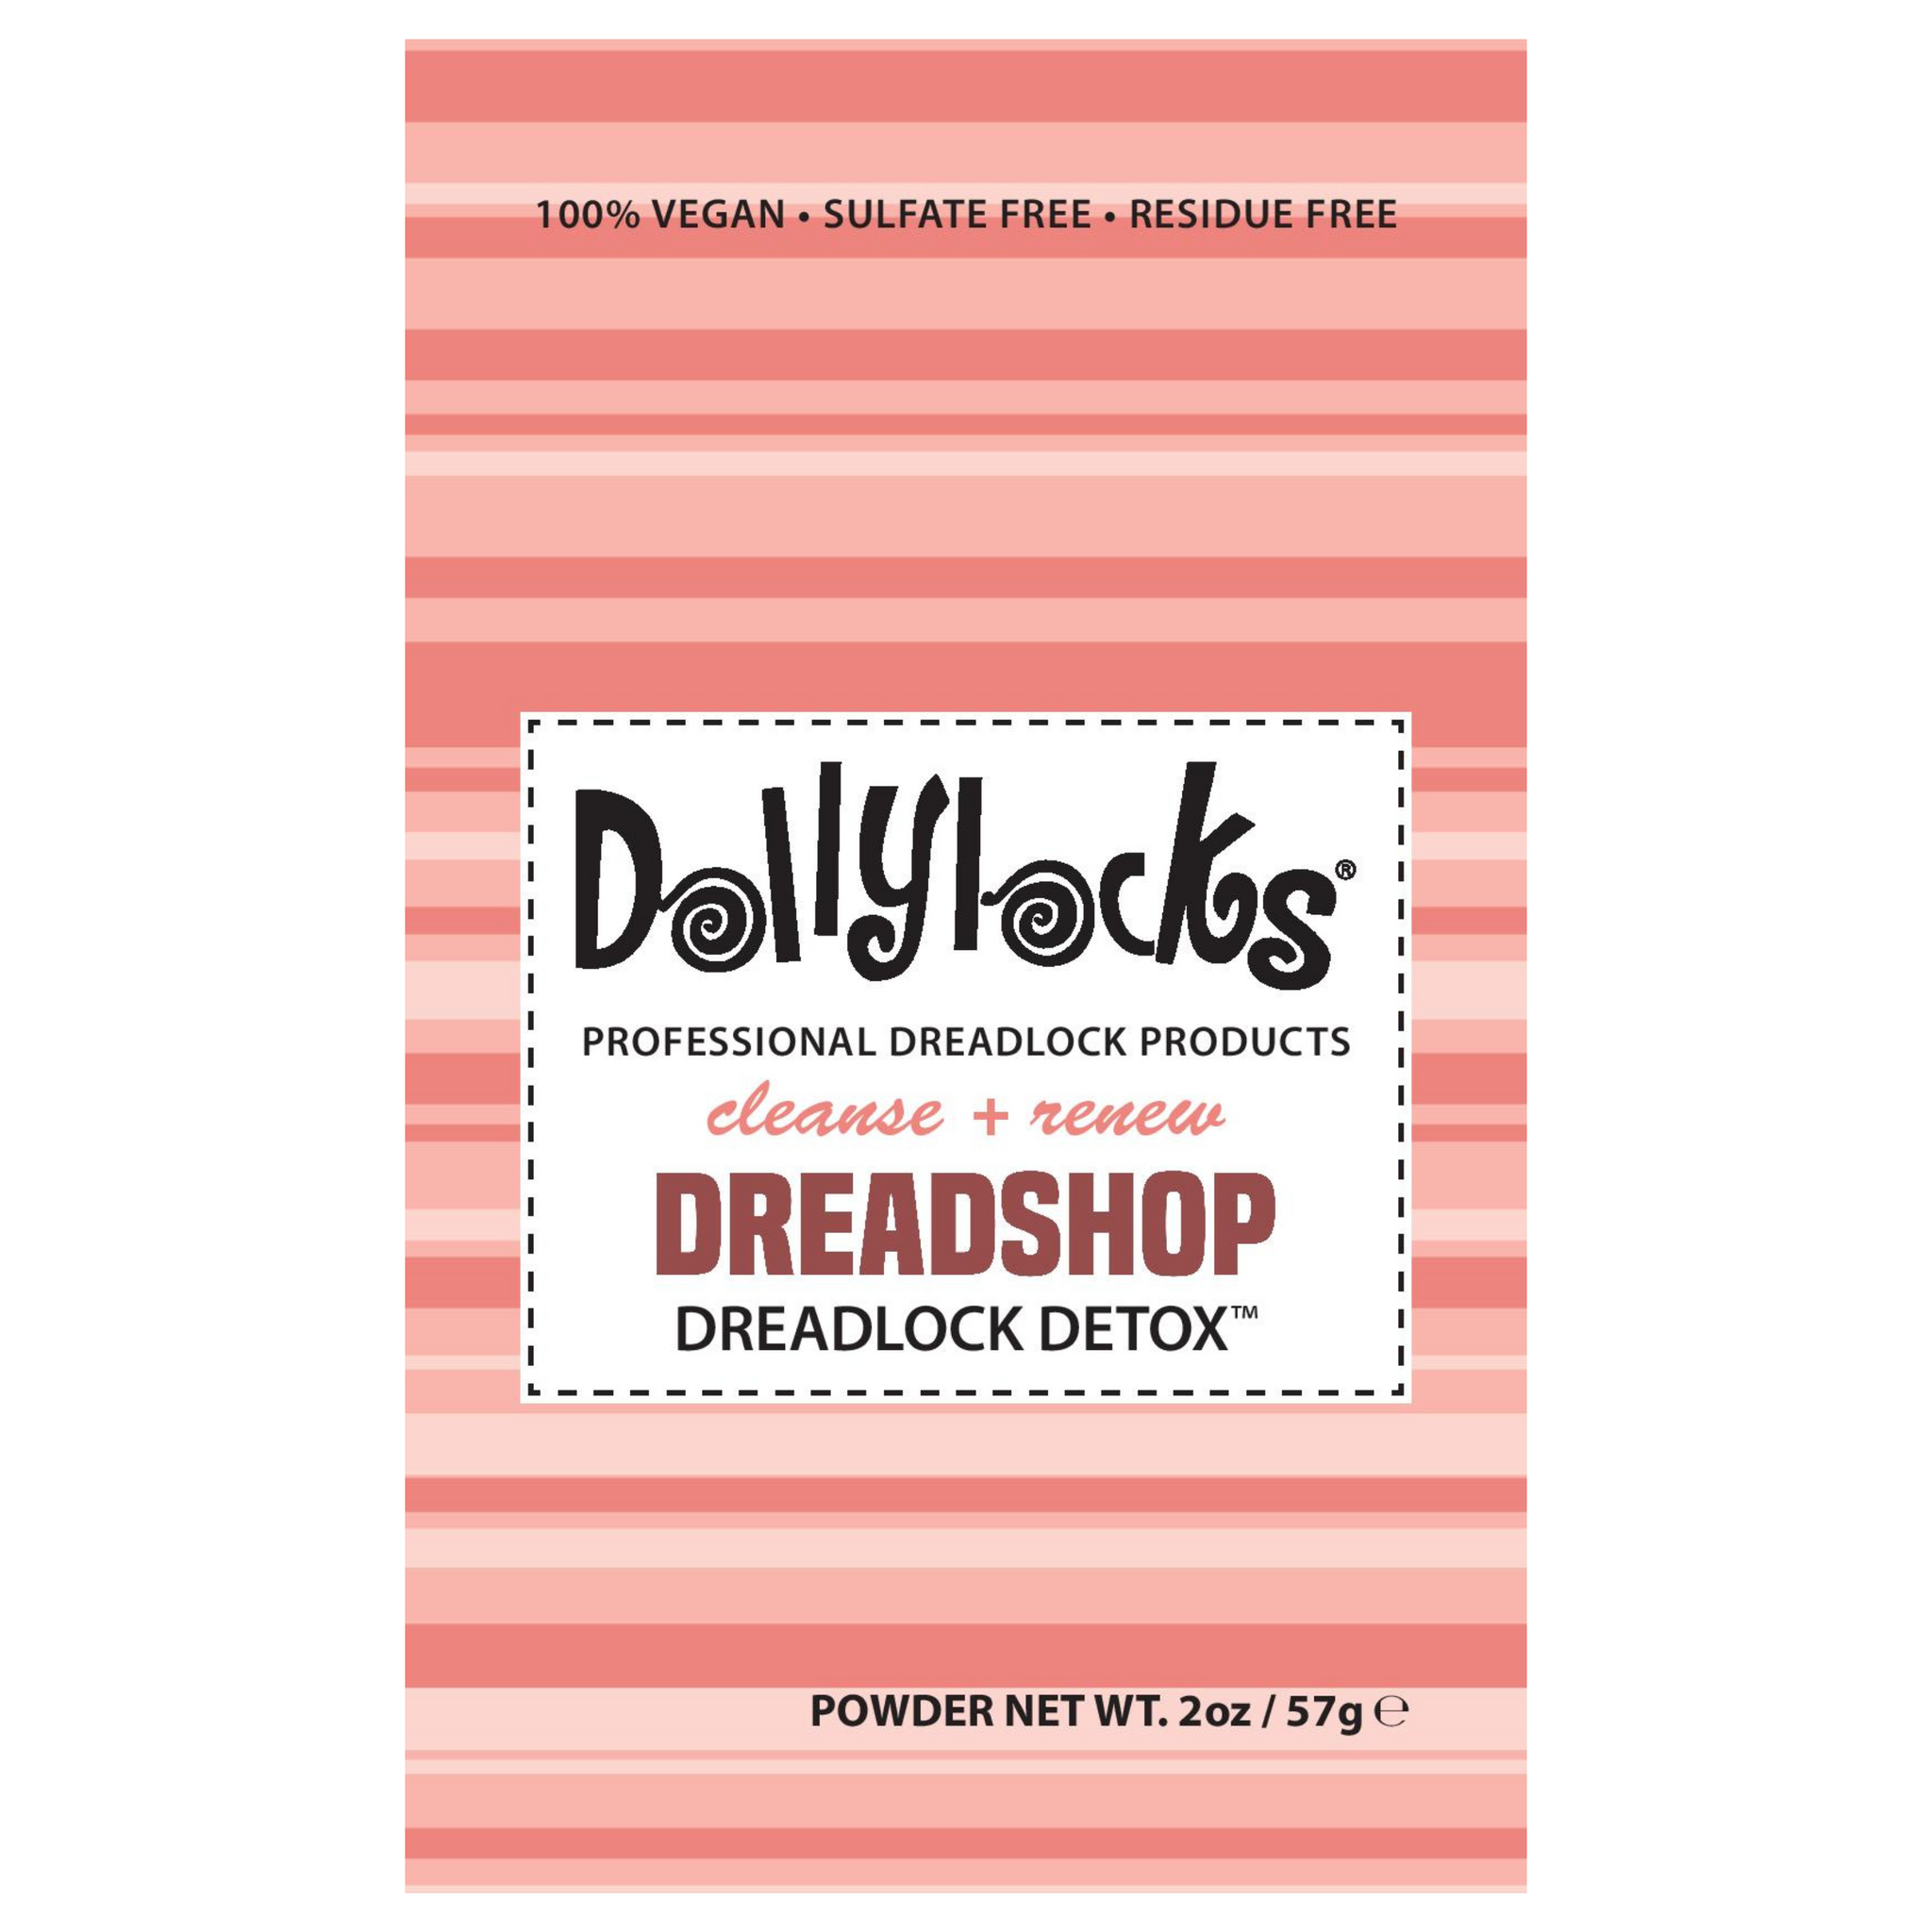 Dreadlock Detox Dreadshop – Dollylocks